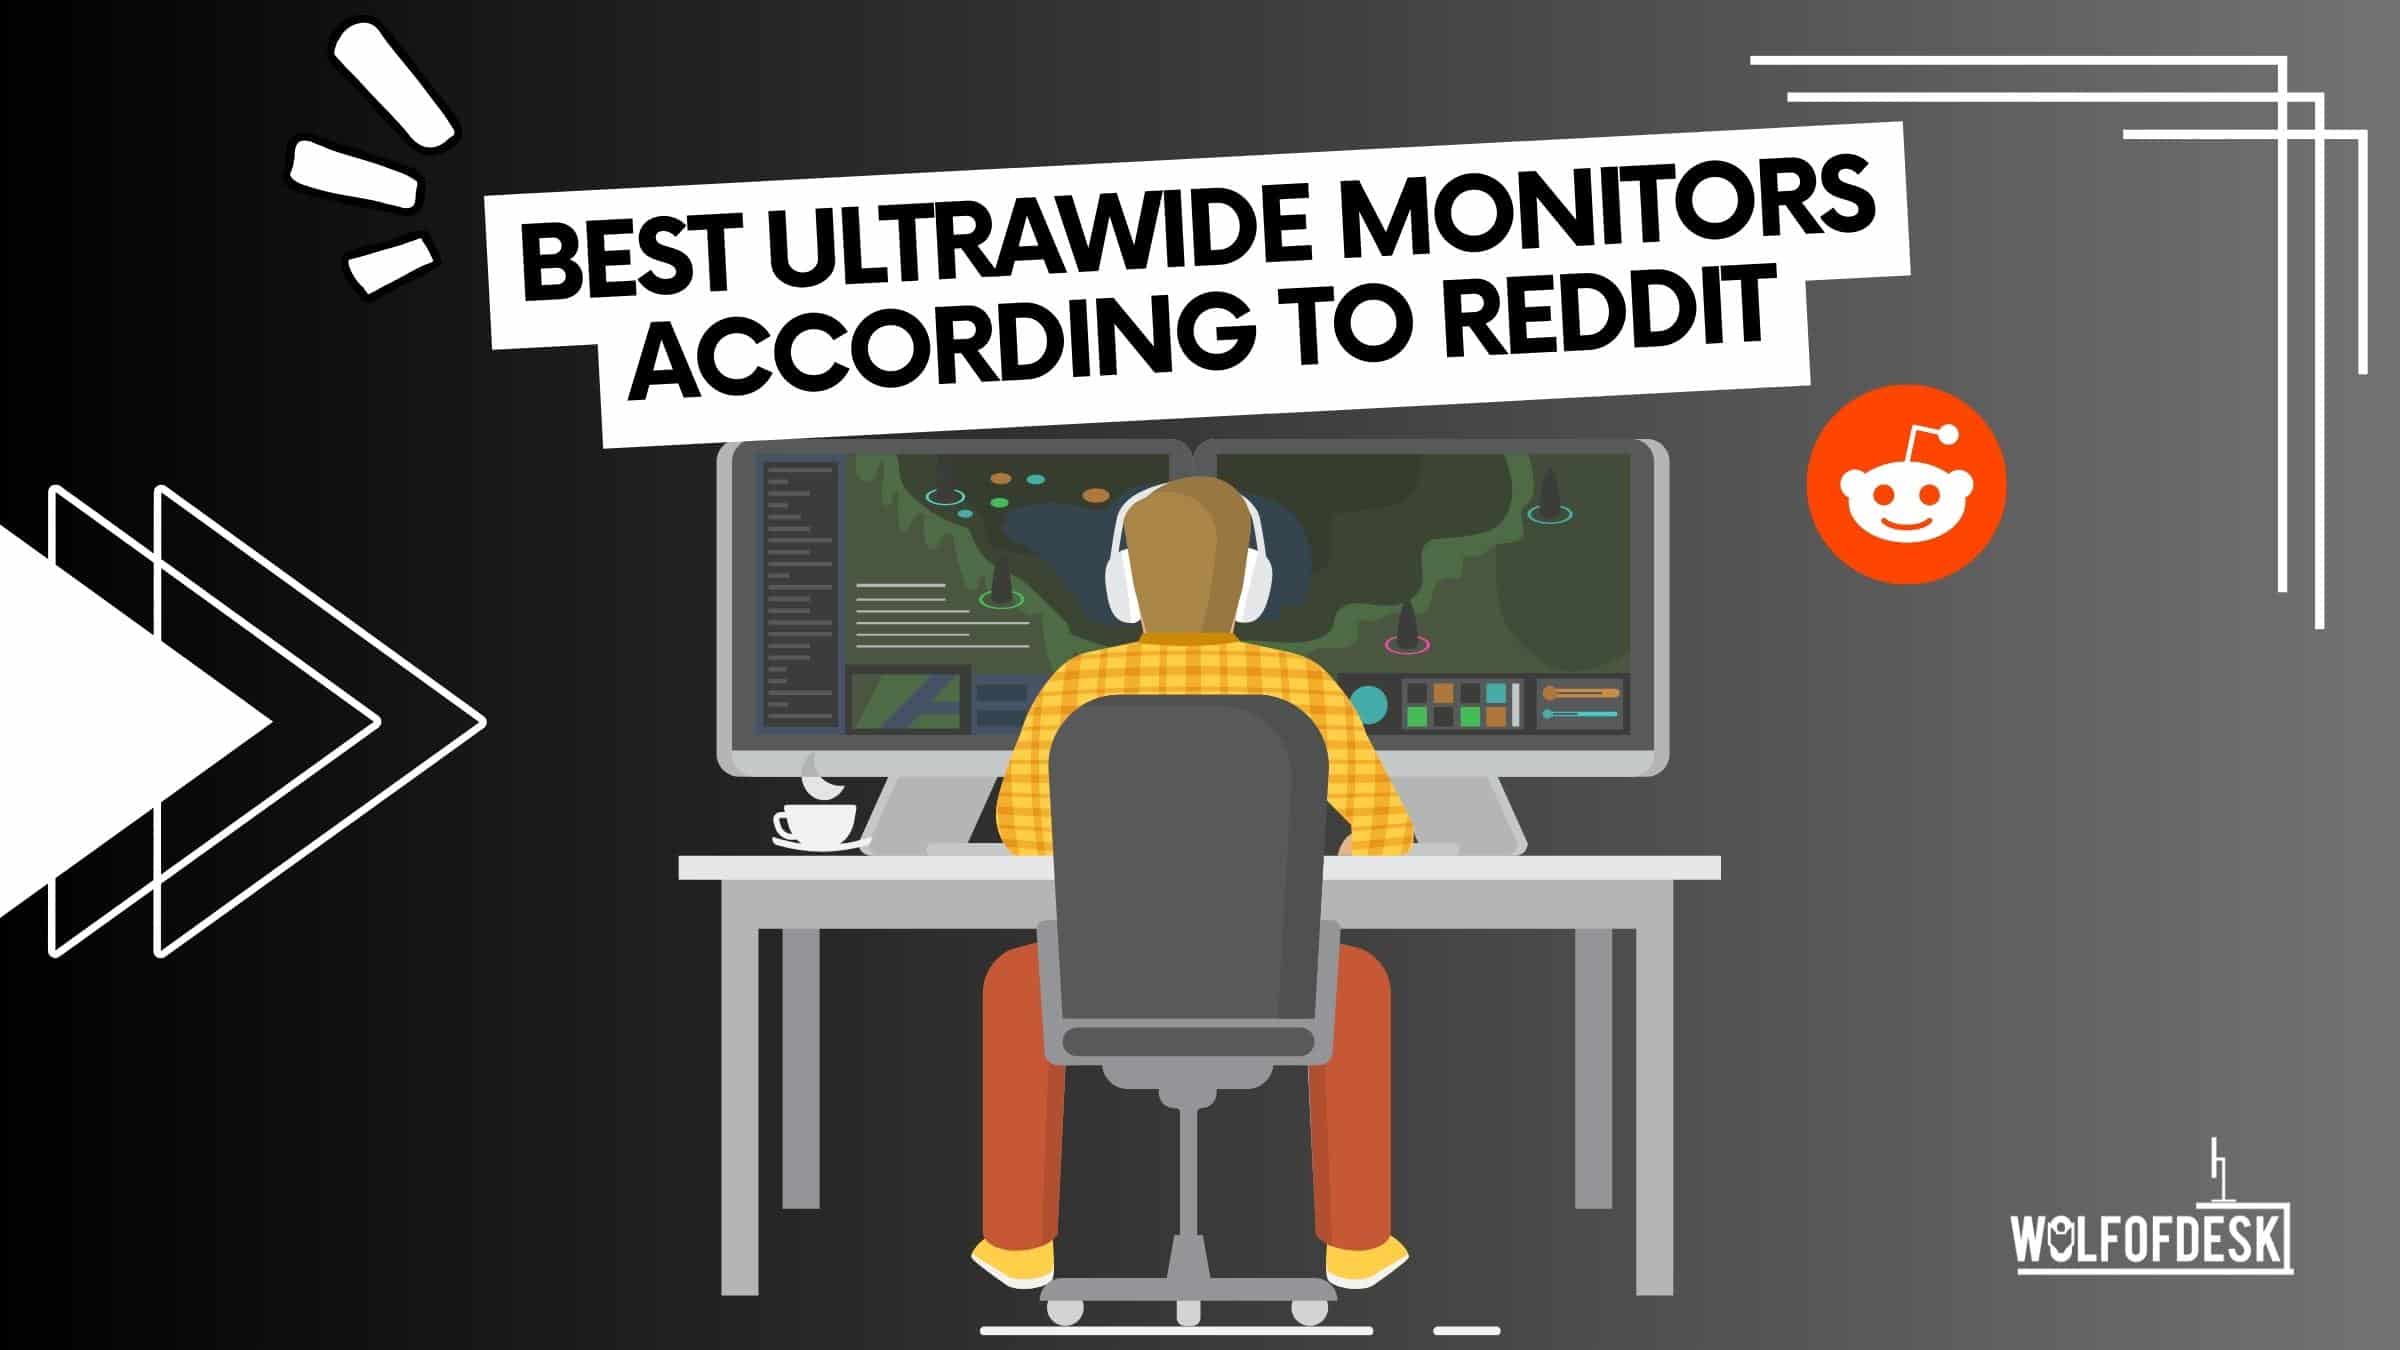 top ultrawide monitors by reddit users